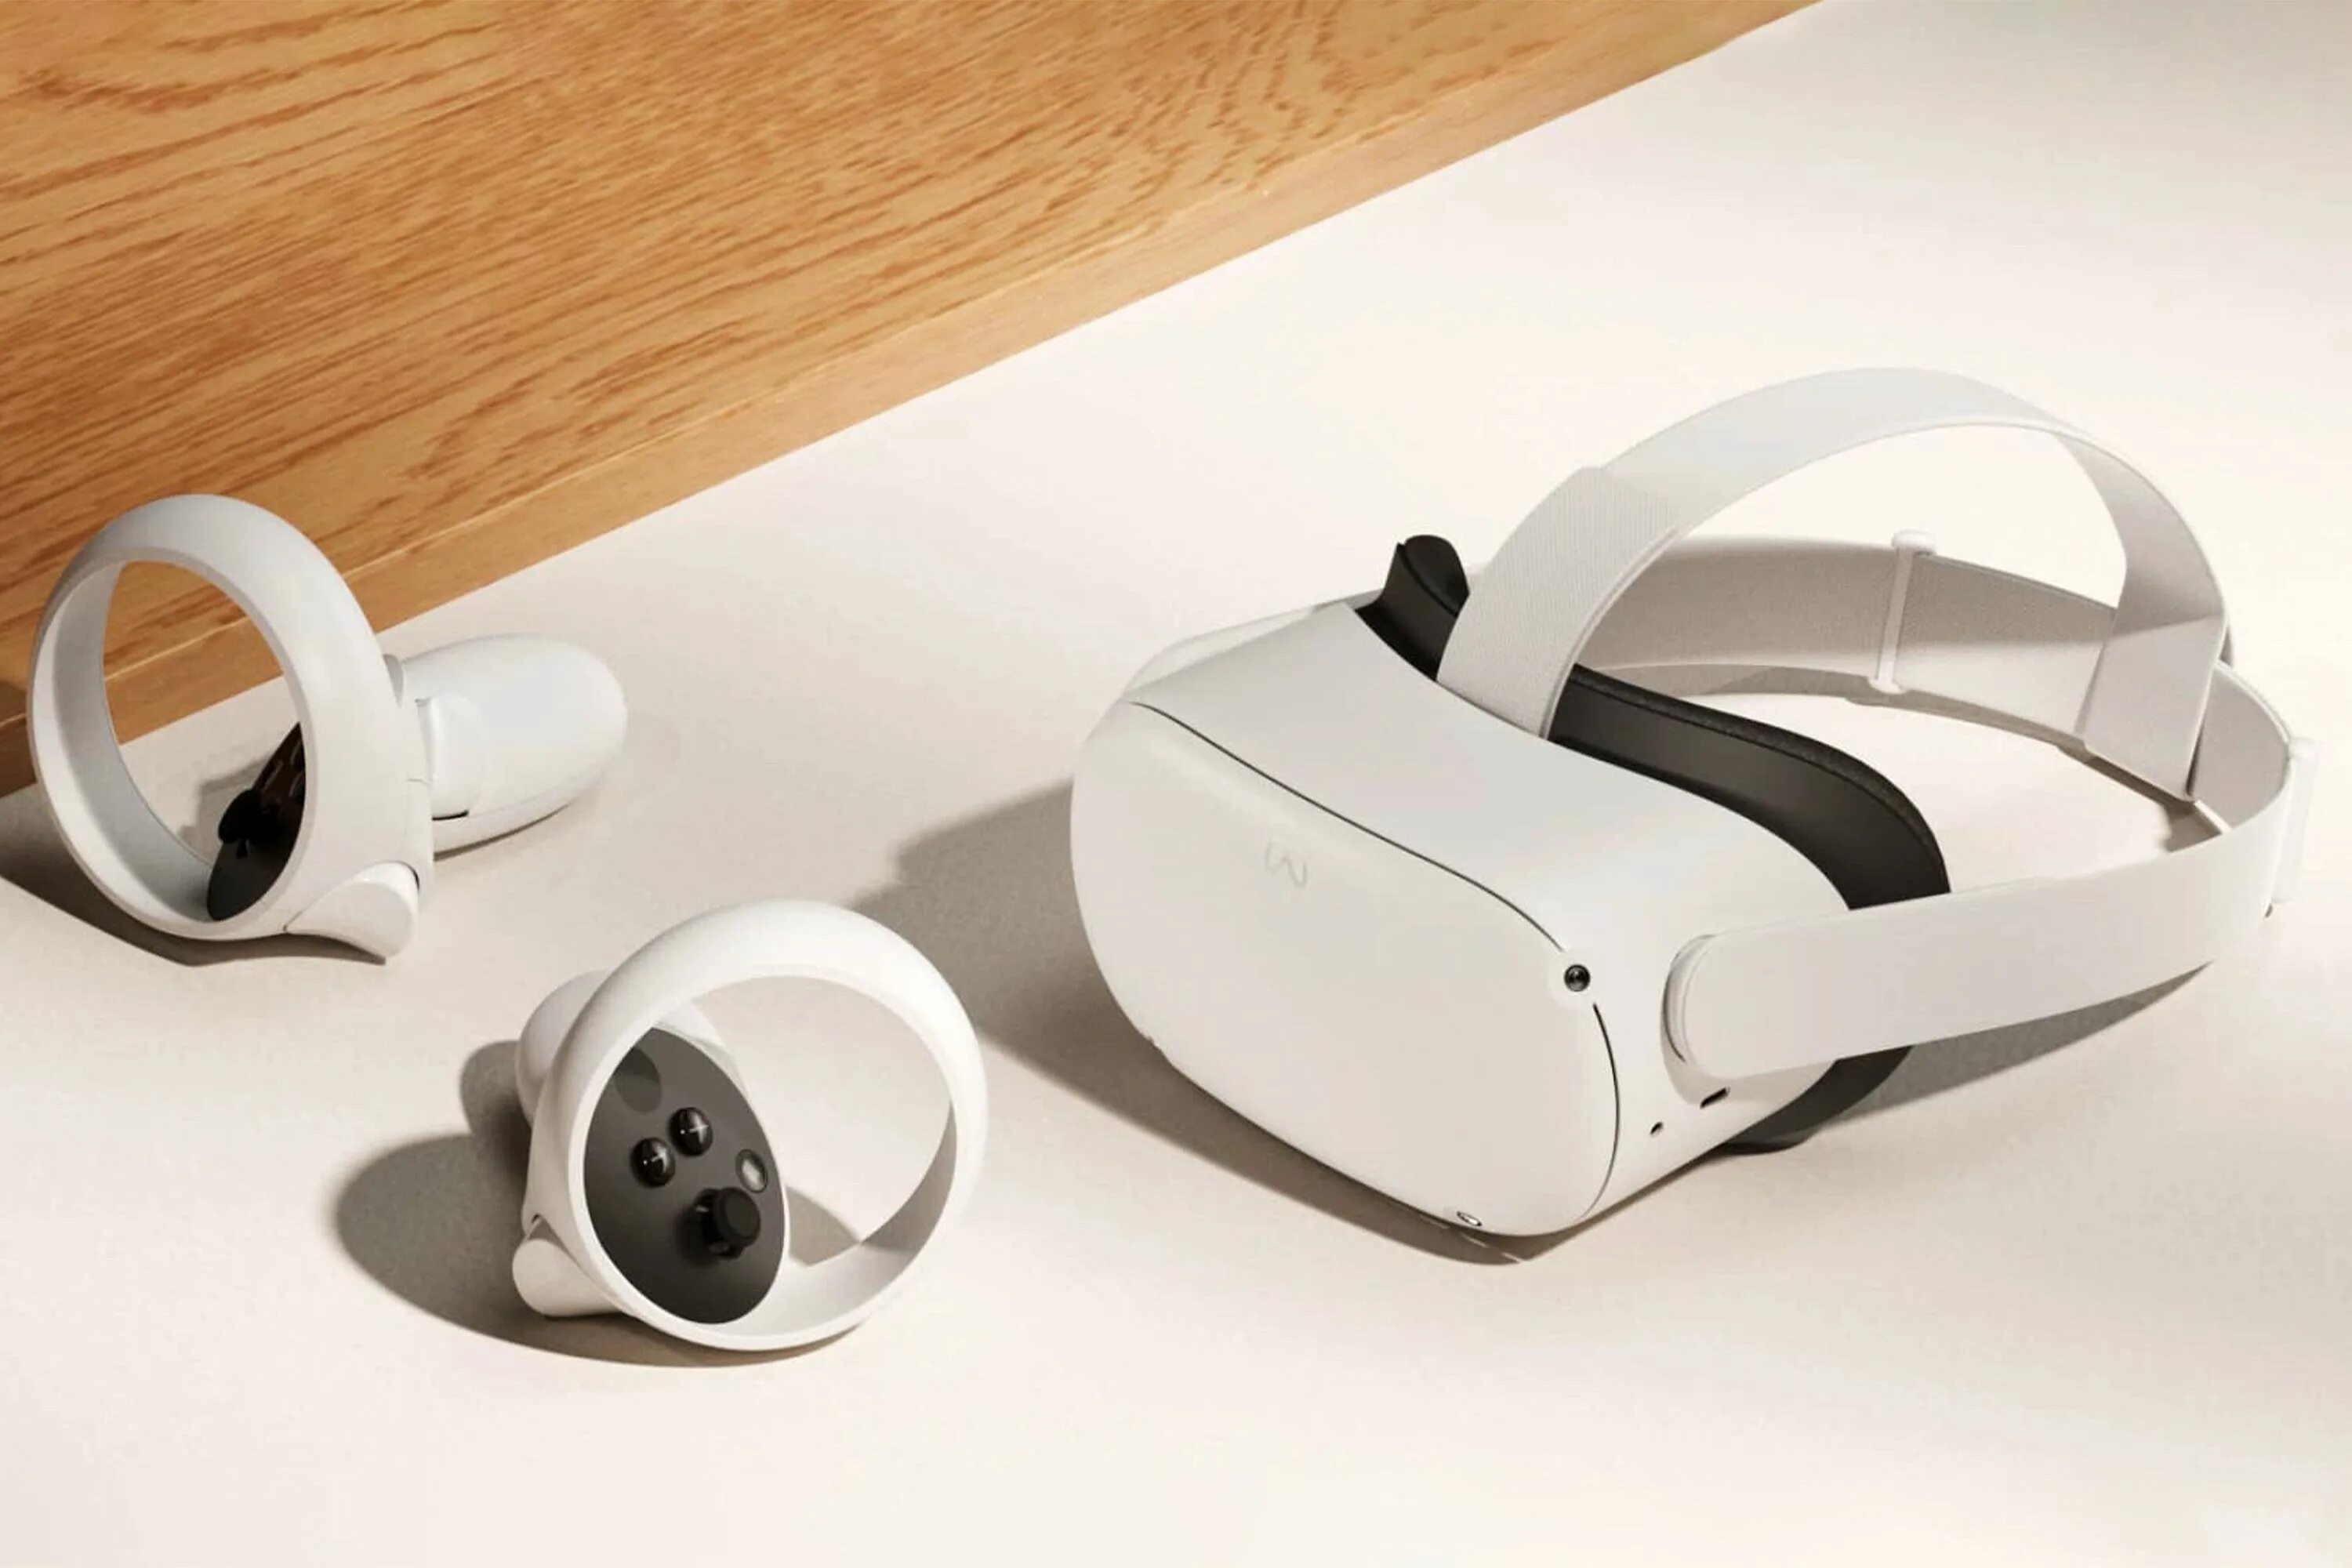 VR Headset meta 2. Oculus Quest Headset. VR шлем. Ar/VR-гарнитур.